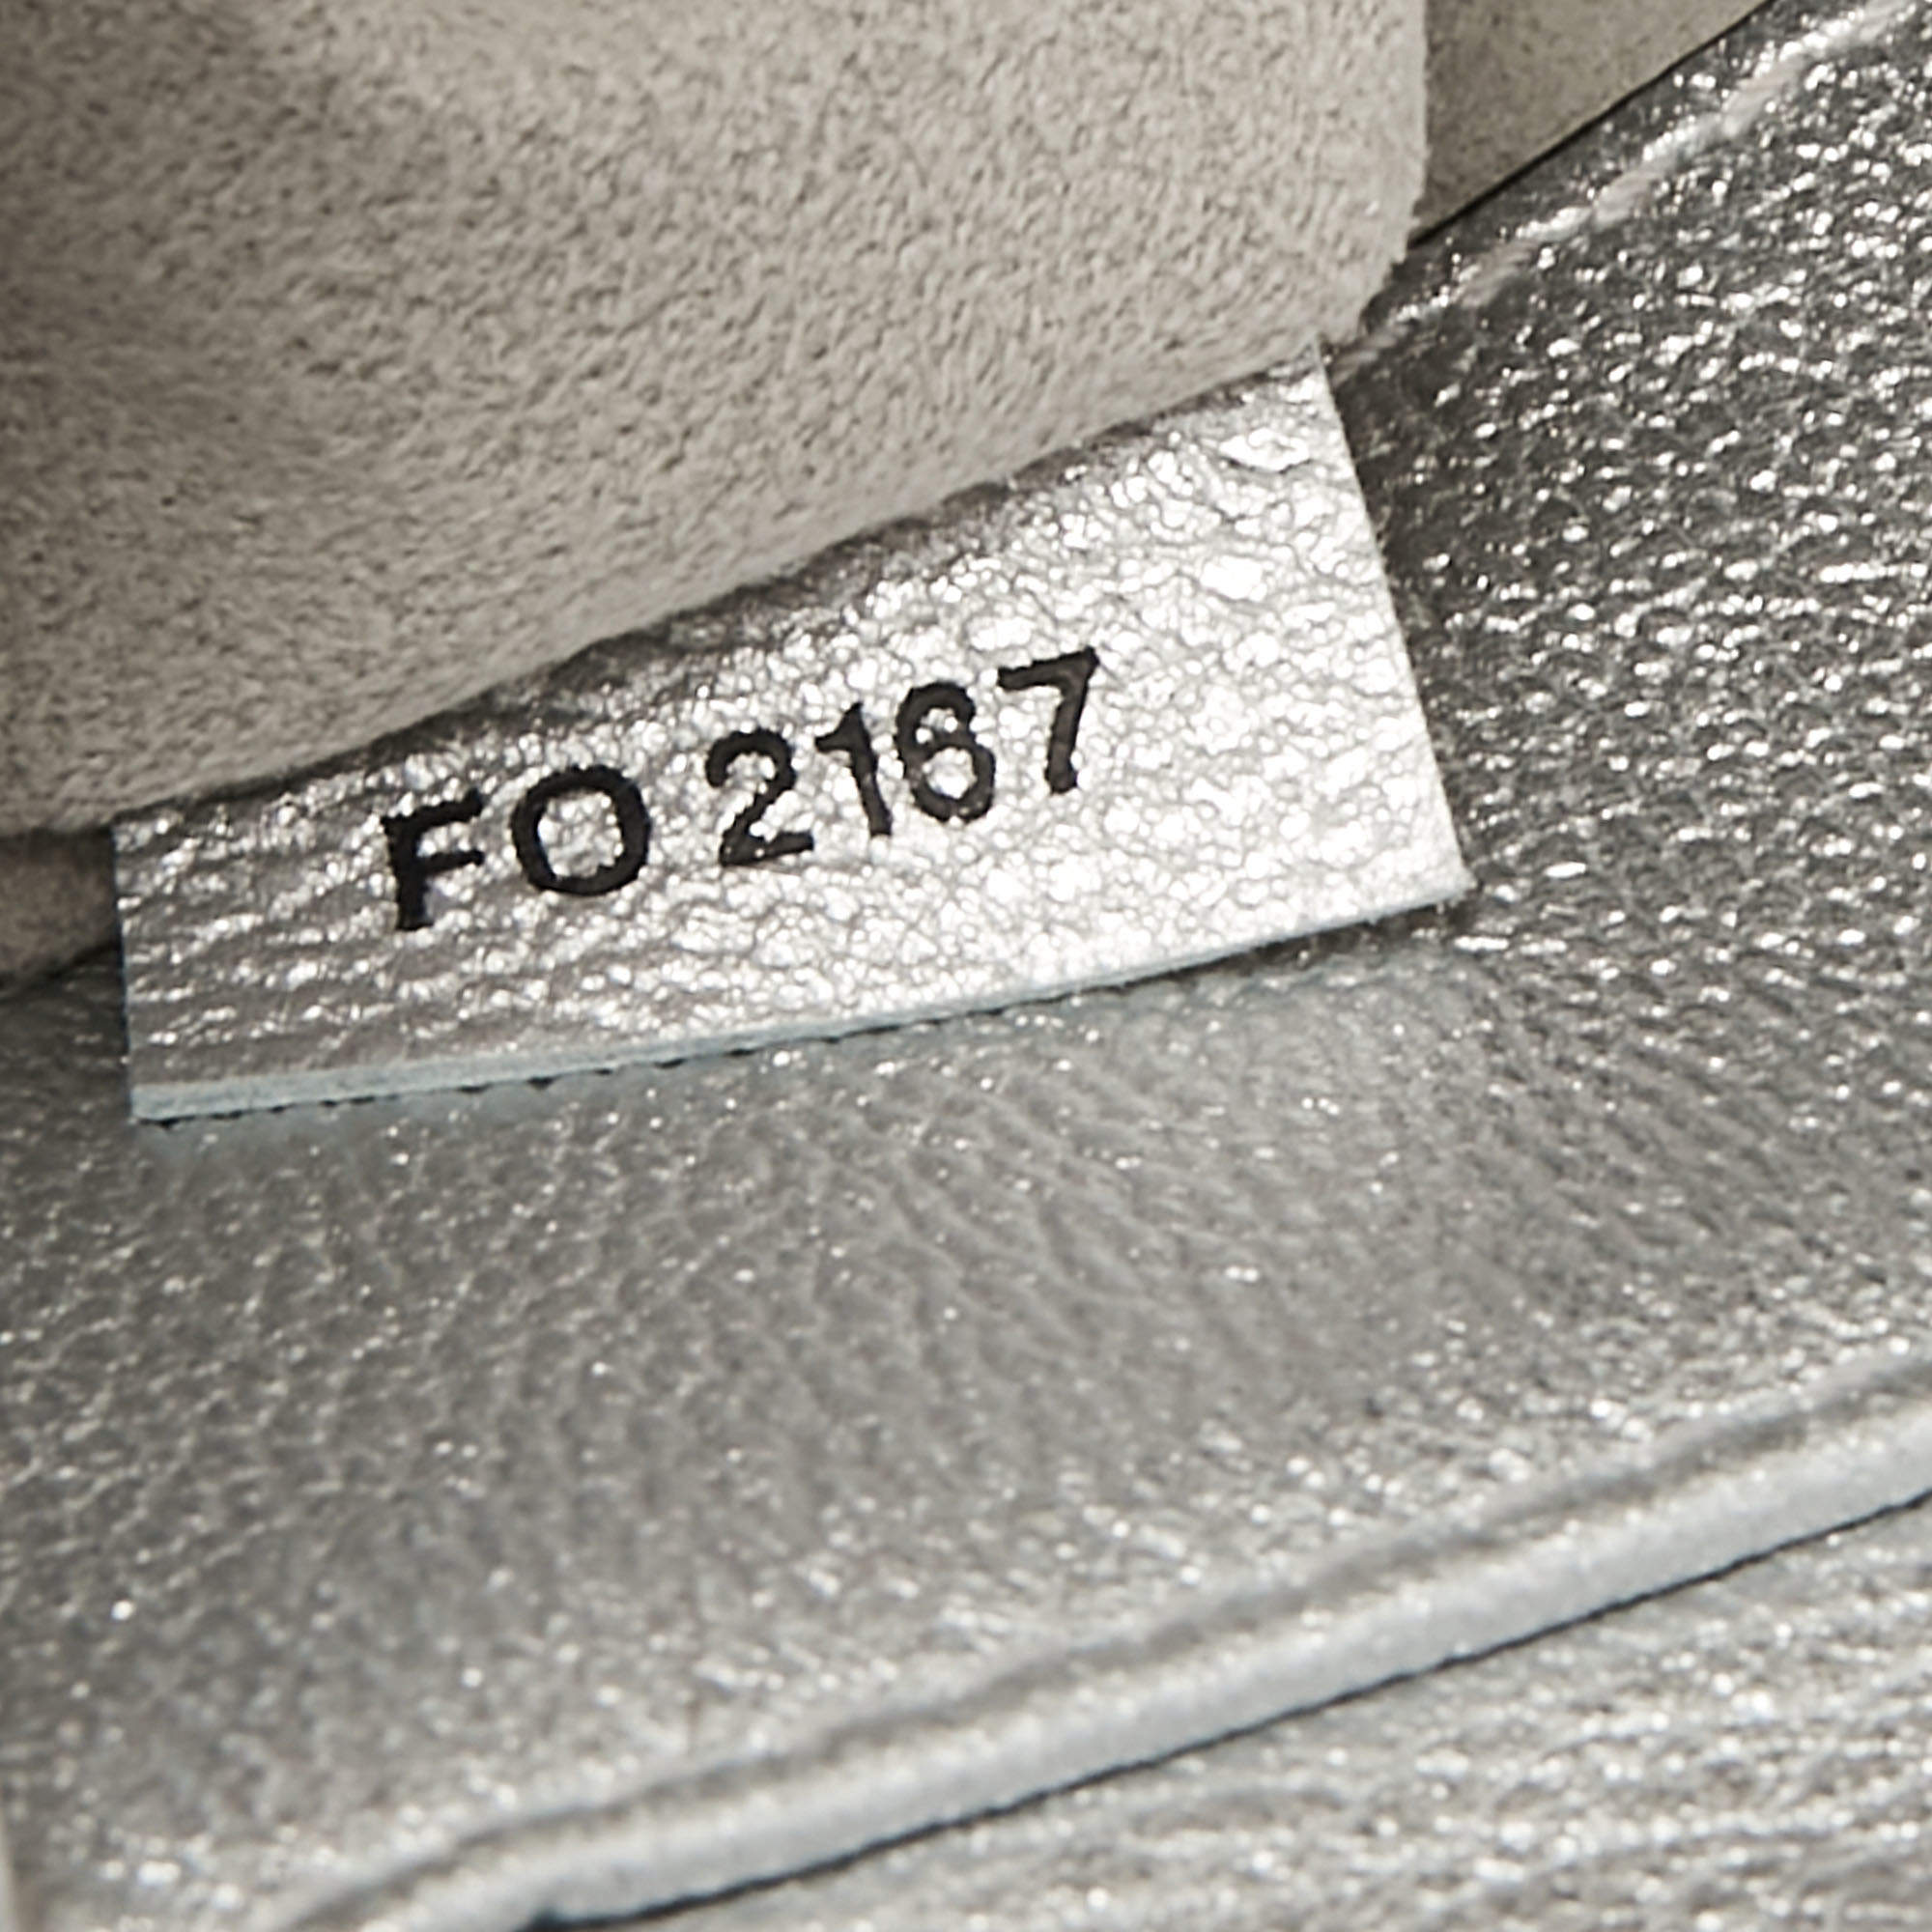 Louis Vuitton Silver Metallic Leather Braided Around Very Chain Bag